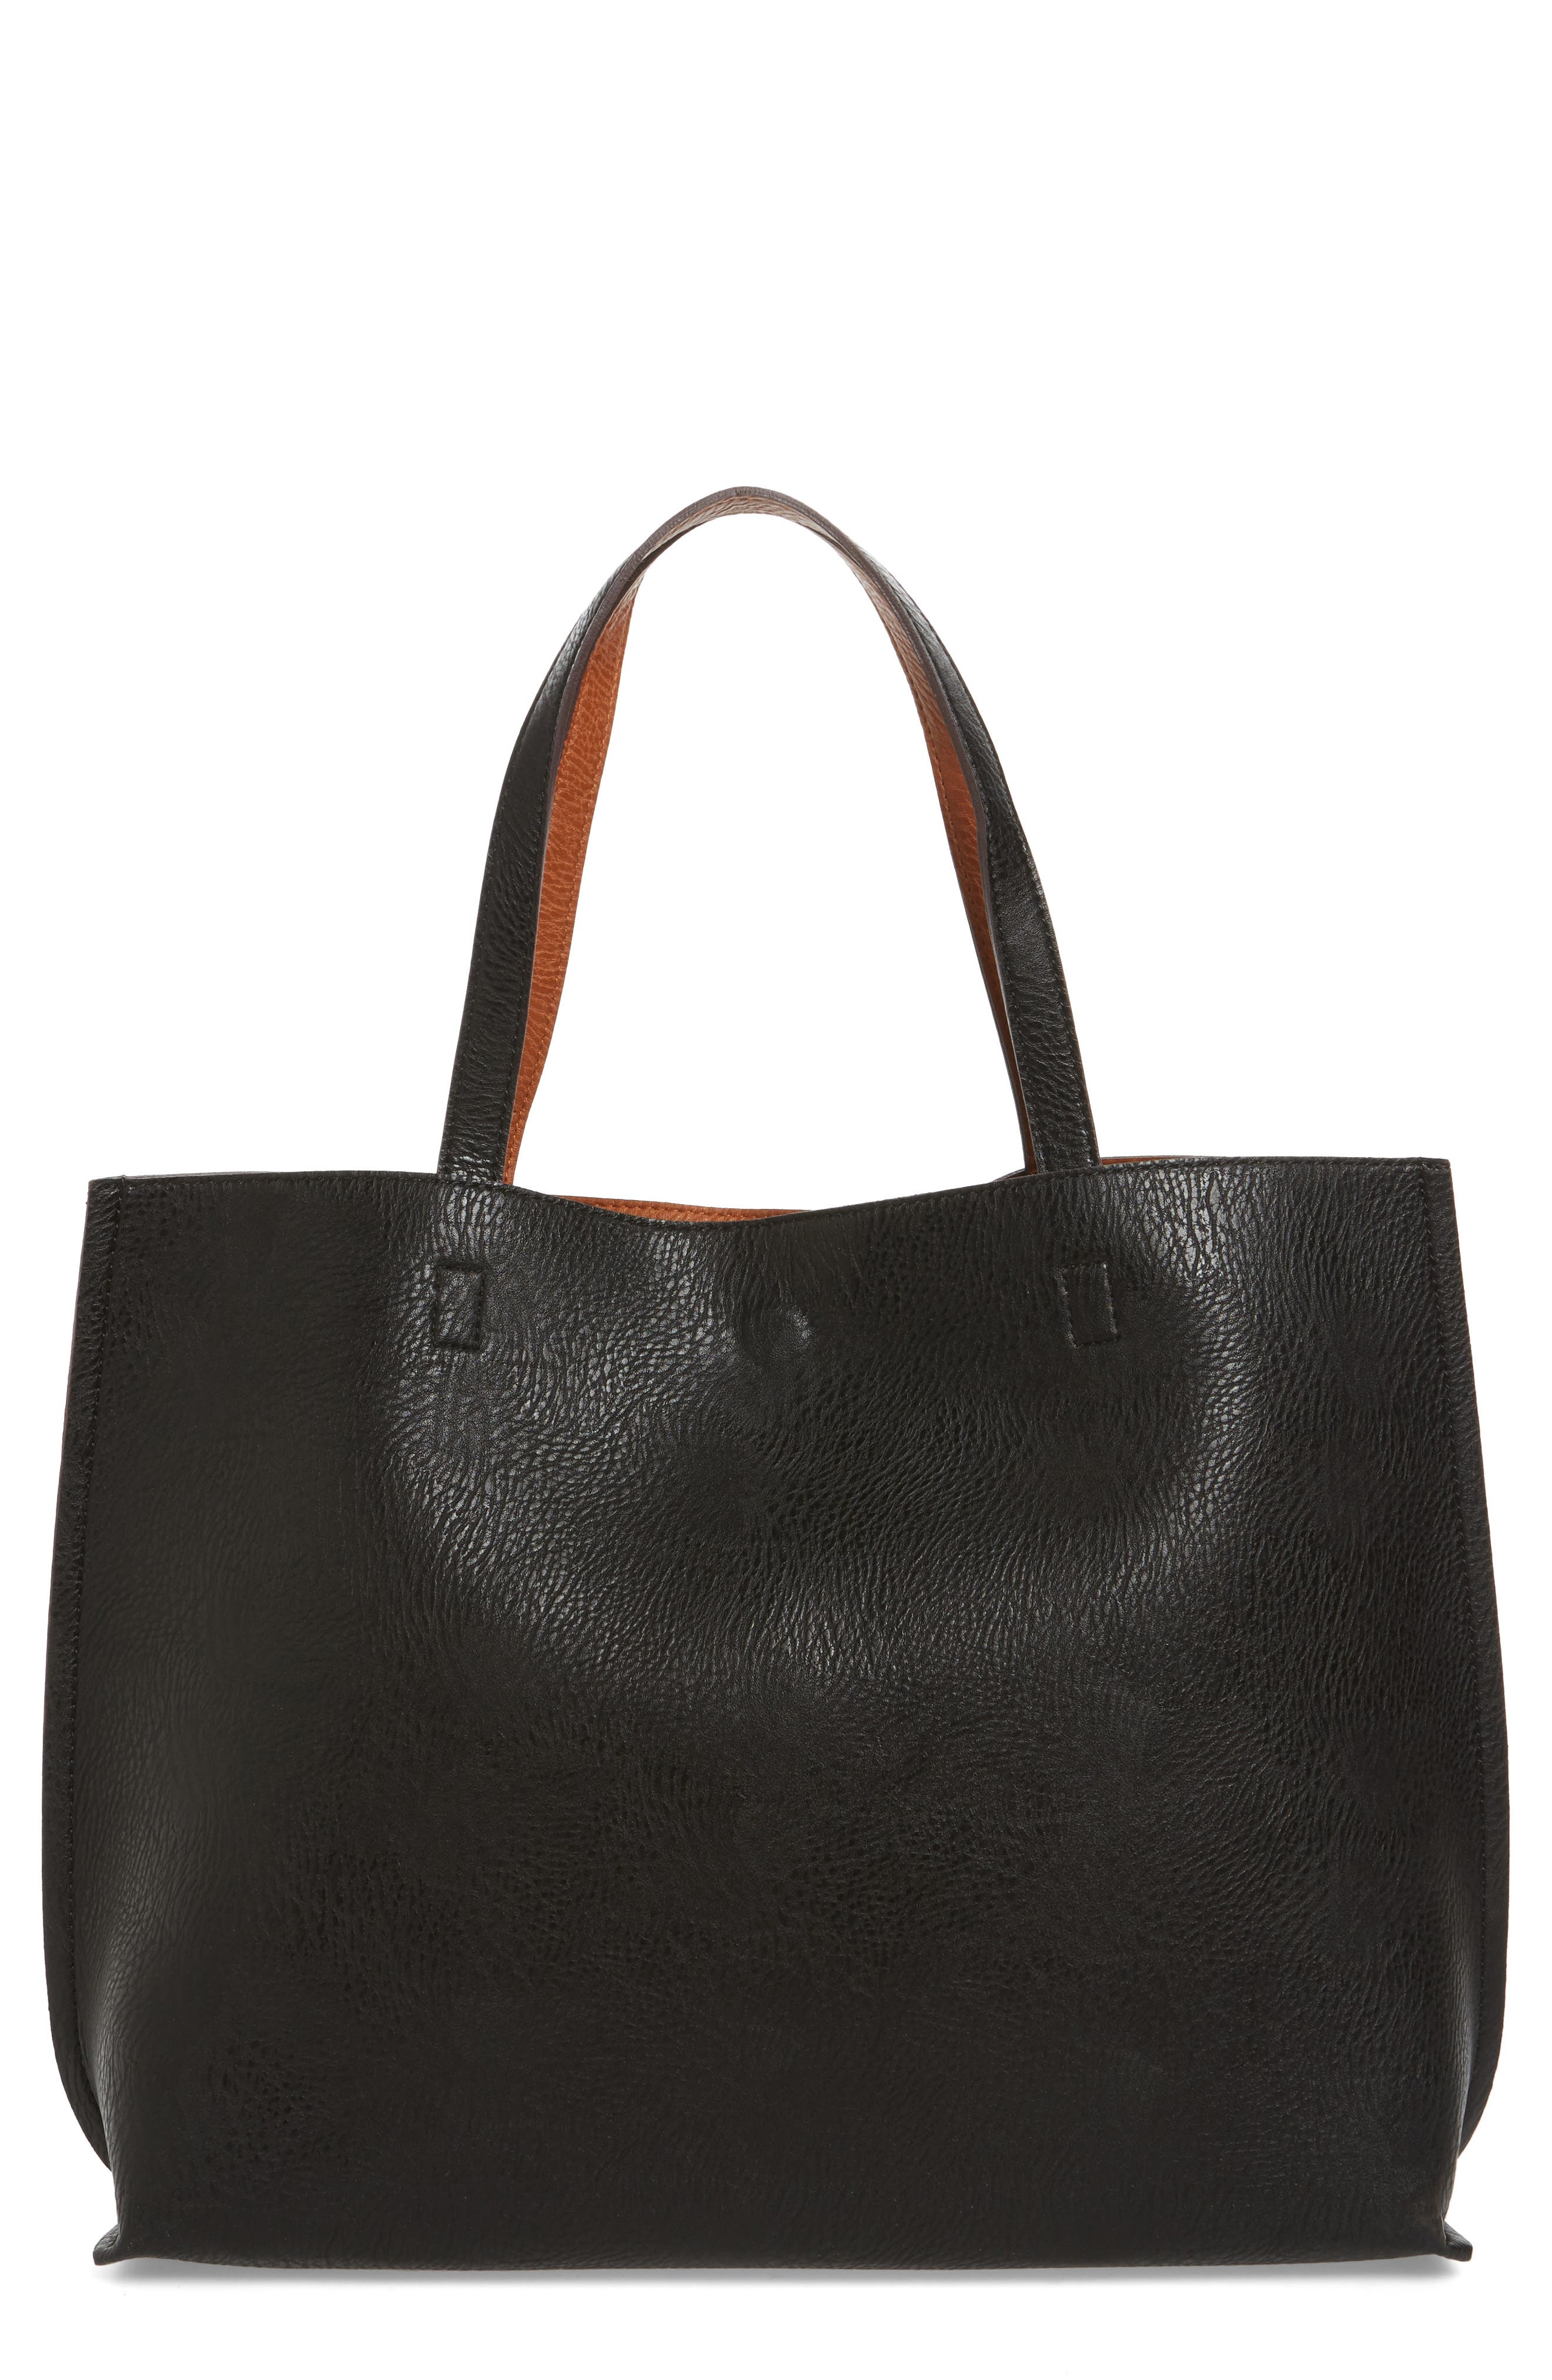 tote bag luggage accessory Shoulder bag leather imitation bag handbag